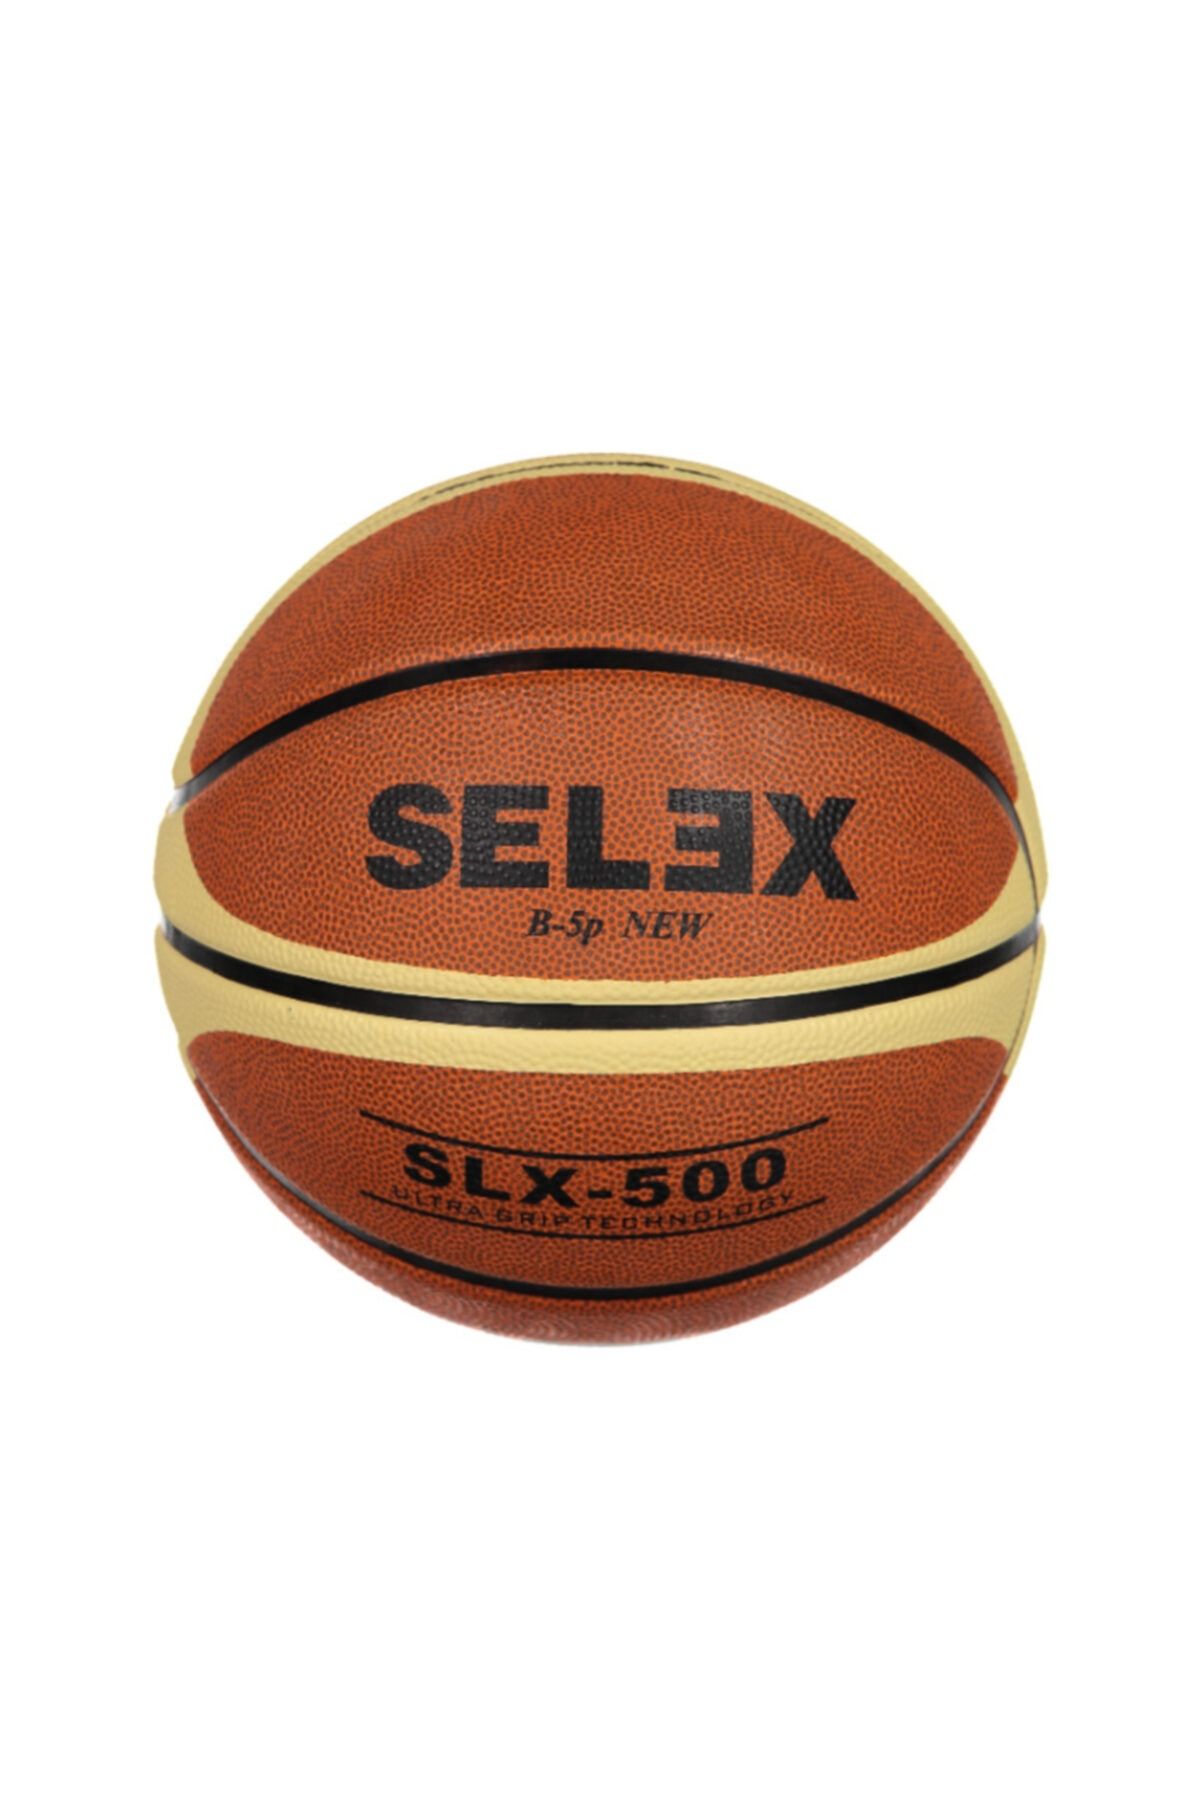 SELEX Slx-500 Basketbol Topu